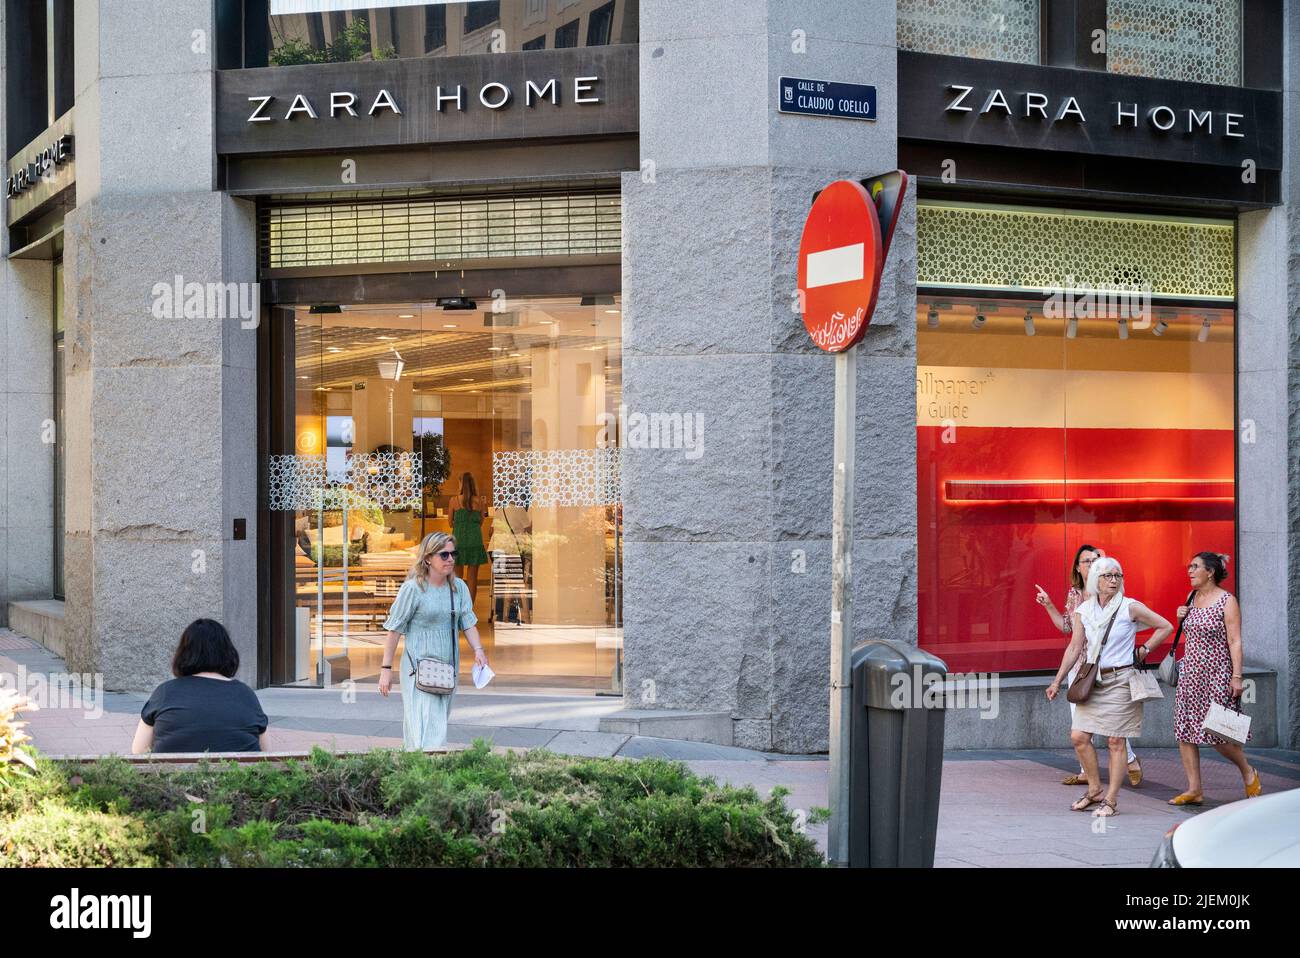 Zara home shop business Immagini e Fotos Stock - Alamy